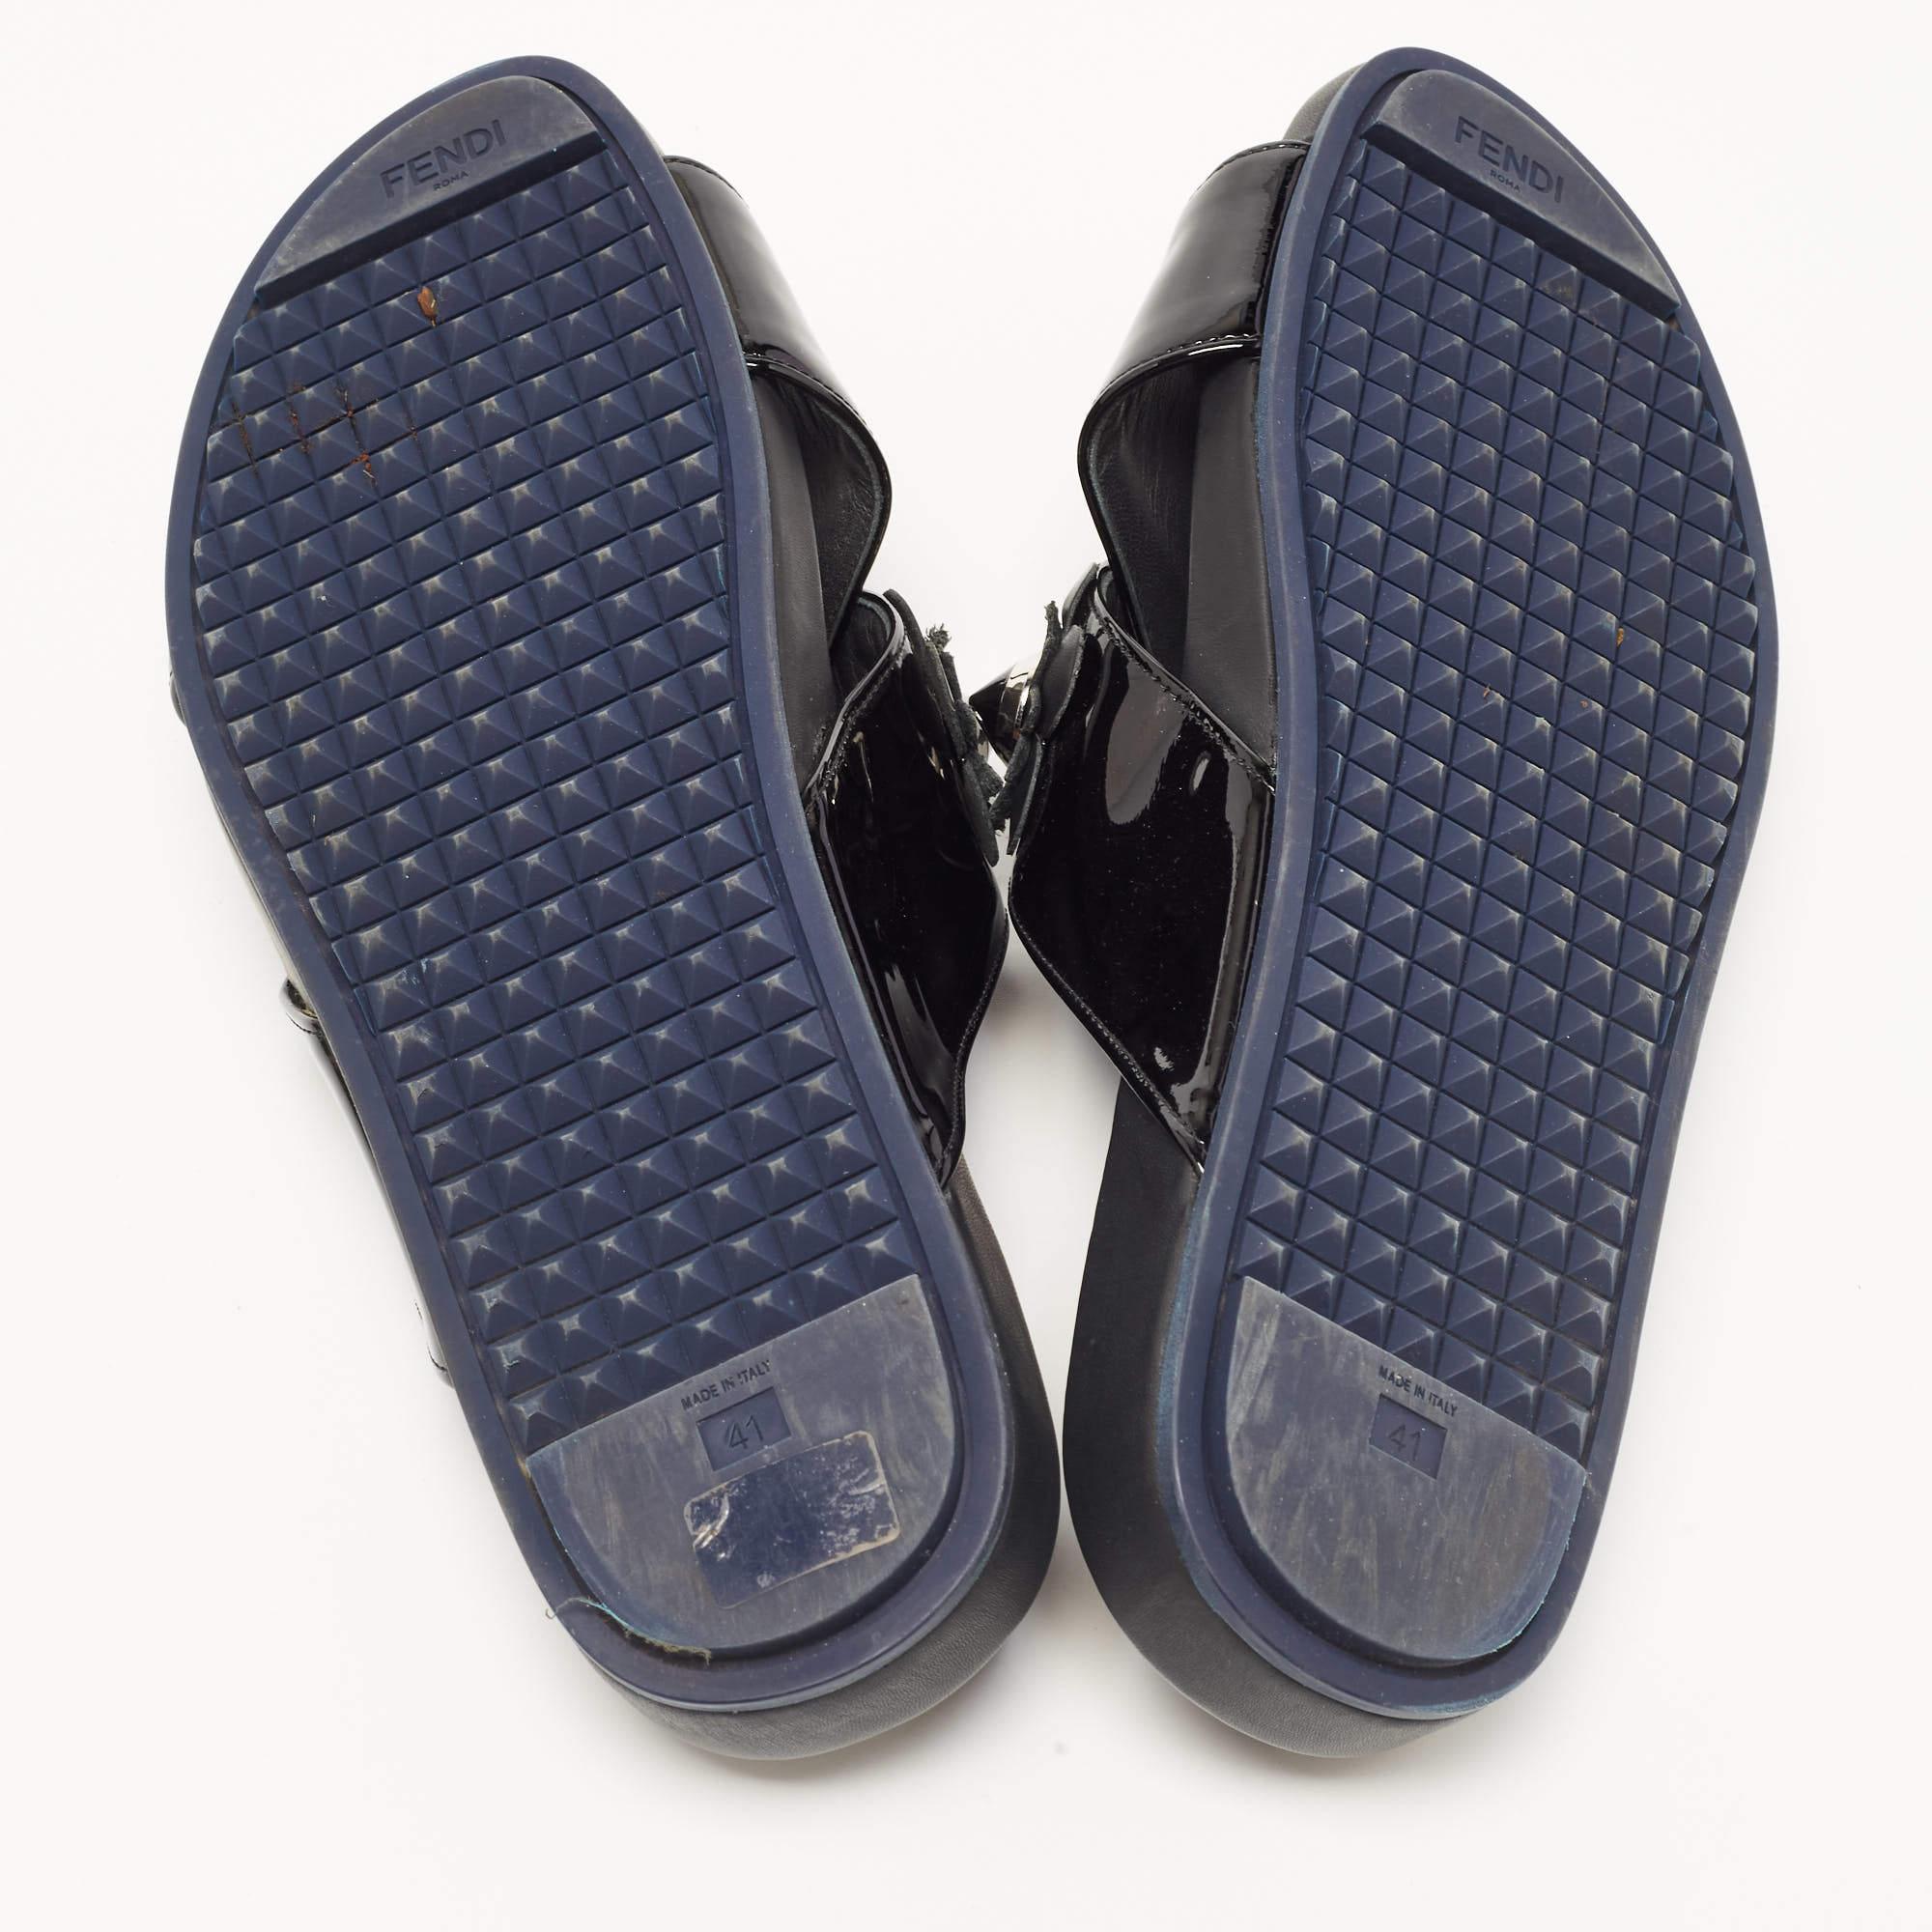 Fendi Black Patent Leather Flowerland Stud Criss Cross Flat Sandals Size 41 4